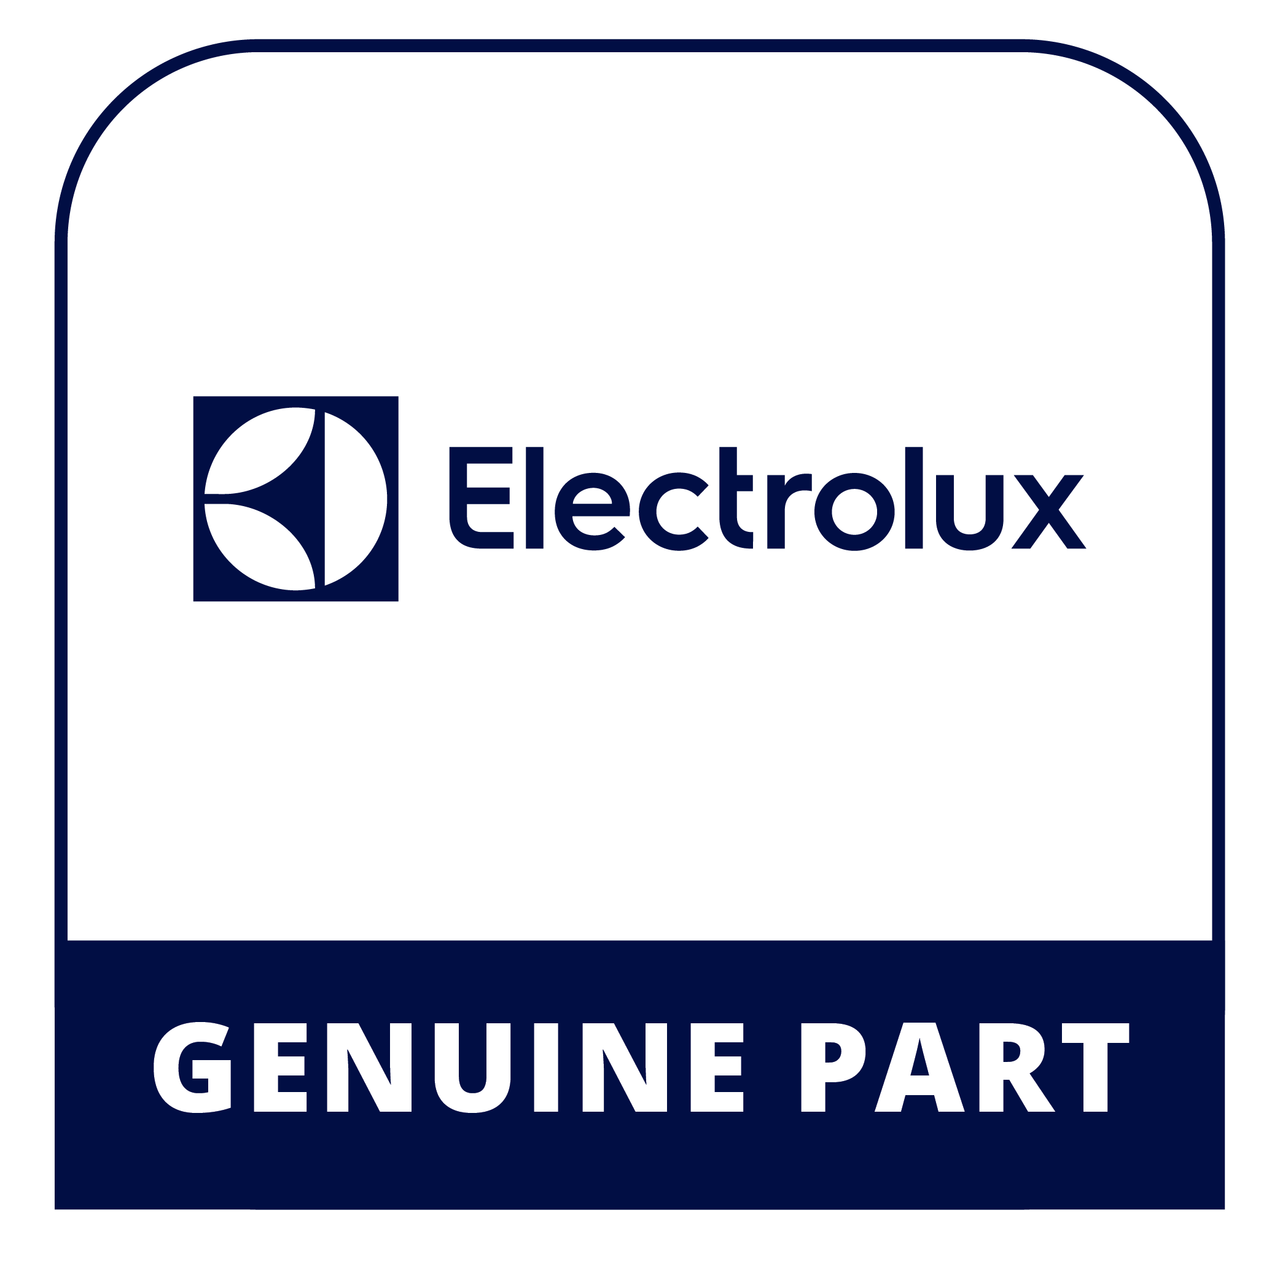 Frigidaire - Electrolux 5304499951 Motor - Genuine Electrolux Part